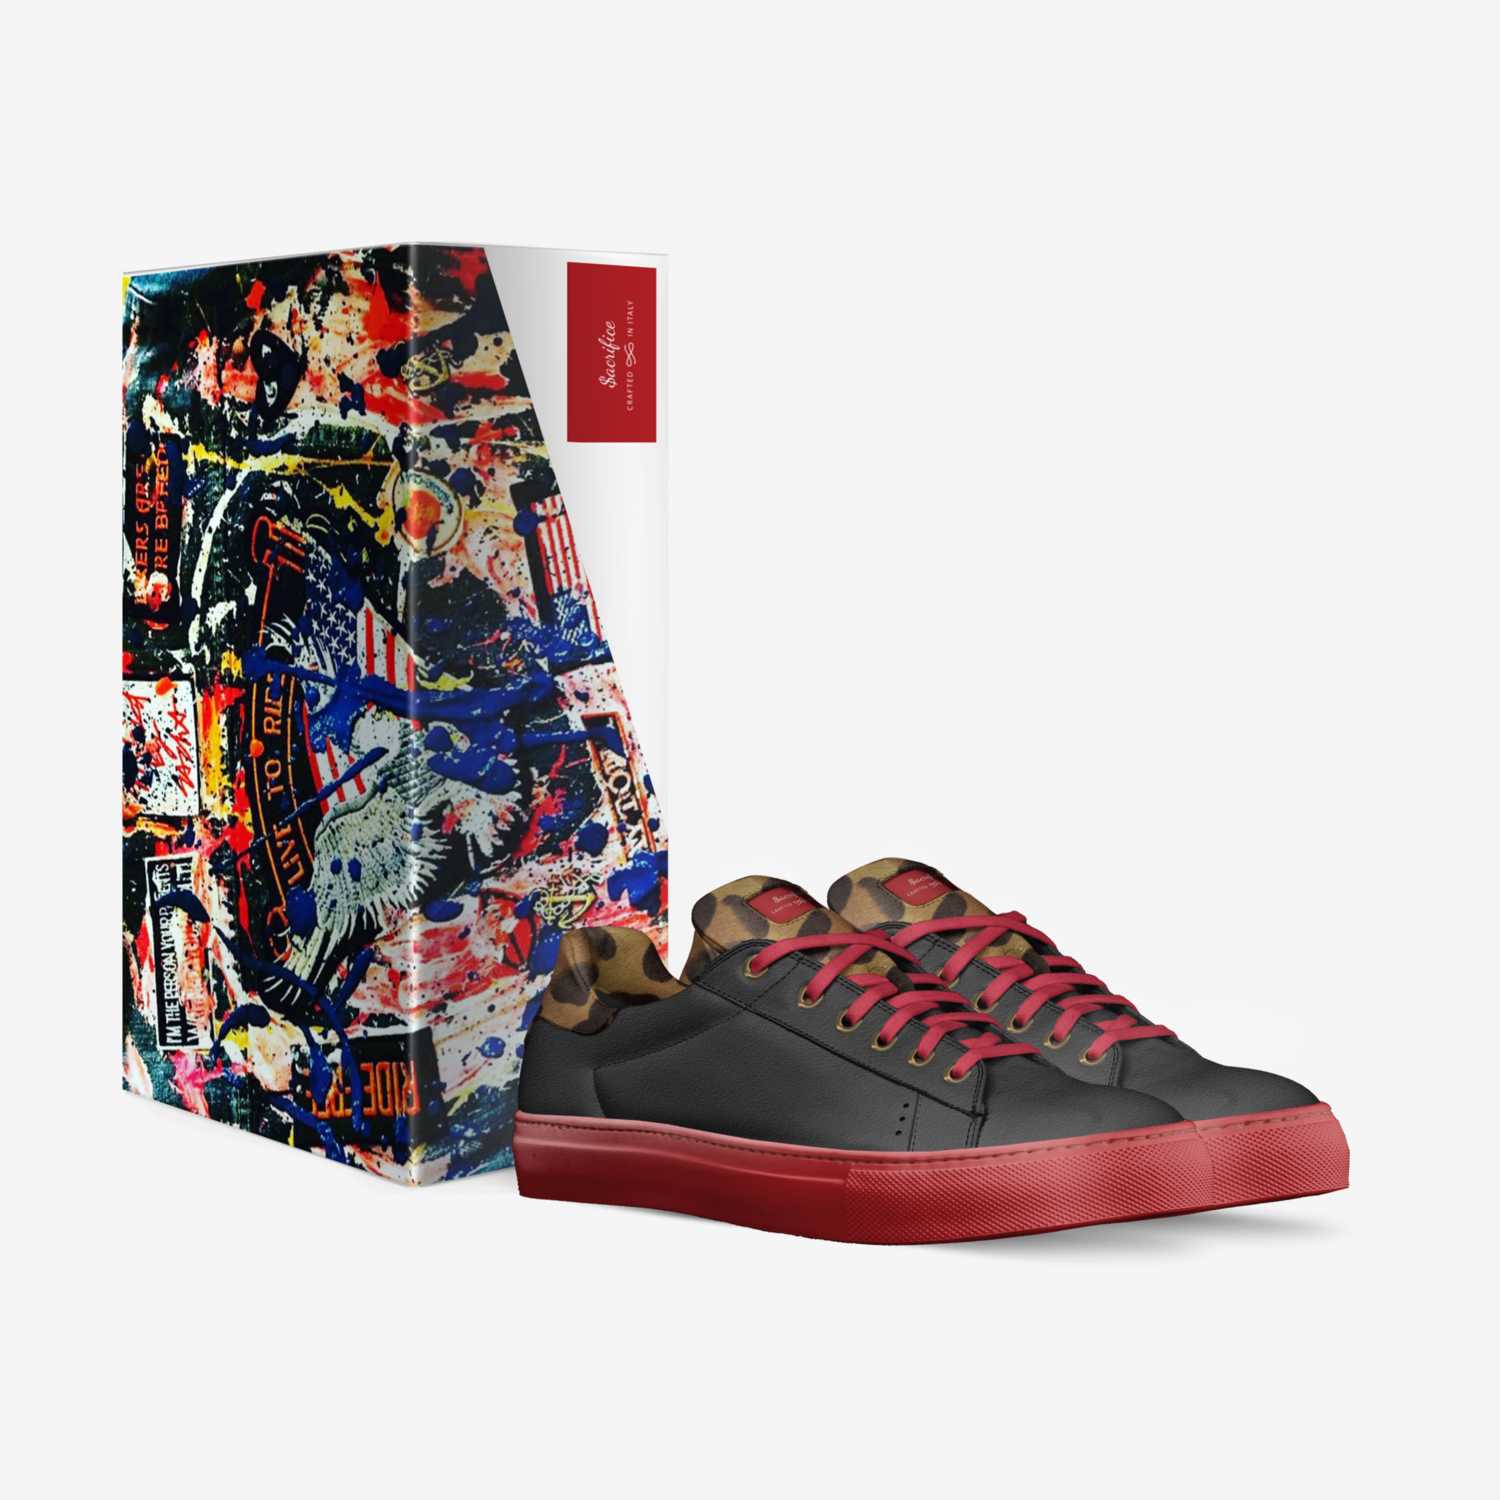 $acrifice custom made in Italy shoes by Sacha Raeburn | Box view